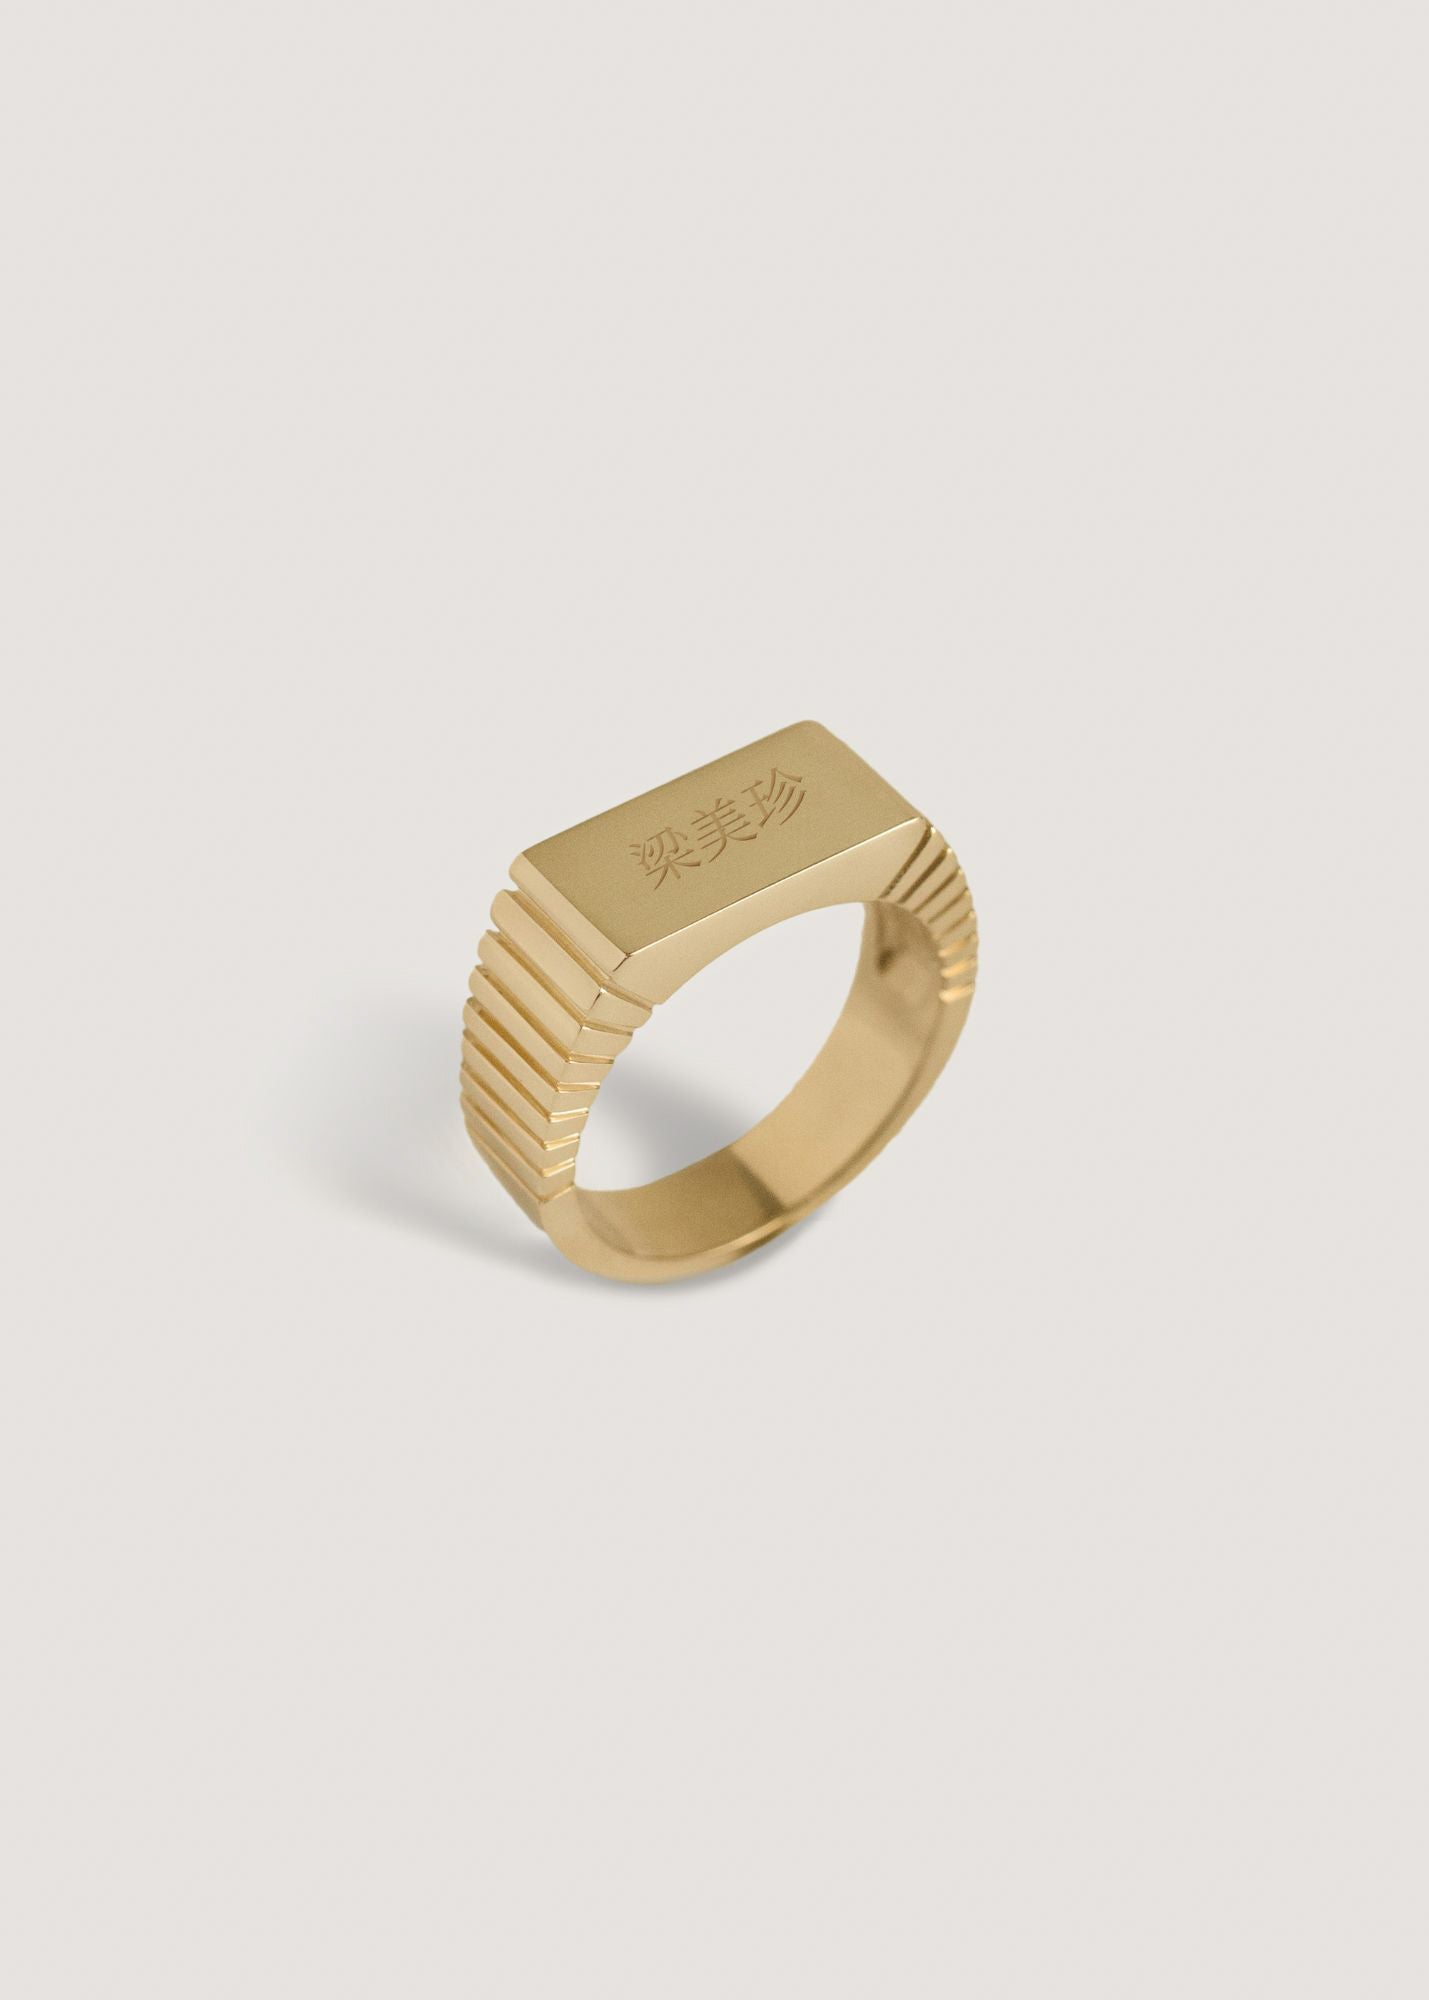 Vivian Ribbed Signet Ring Engraved 14k Solid Gold - Kinn